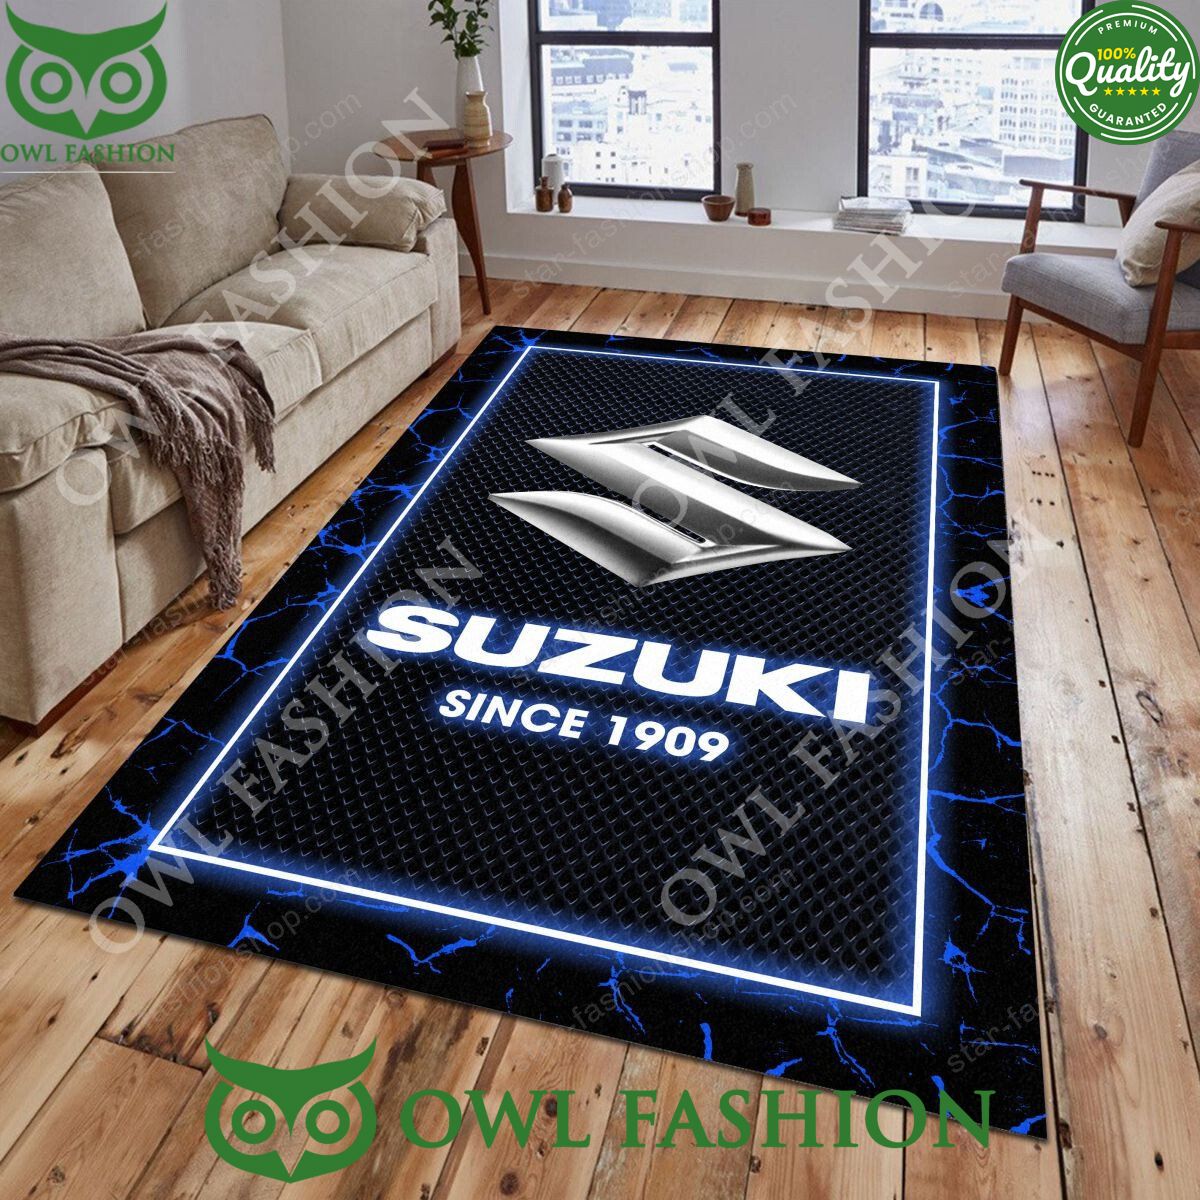 Suzuki Home Living Room Lighting Rug Carpet